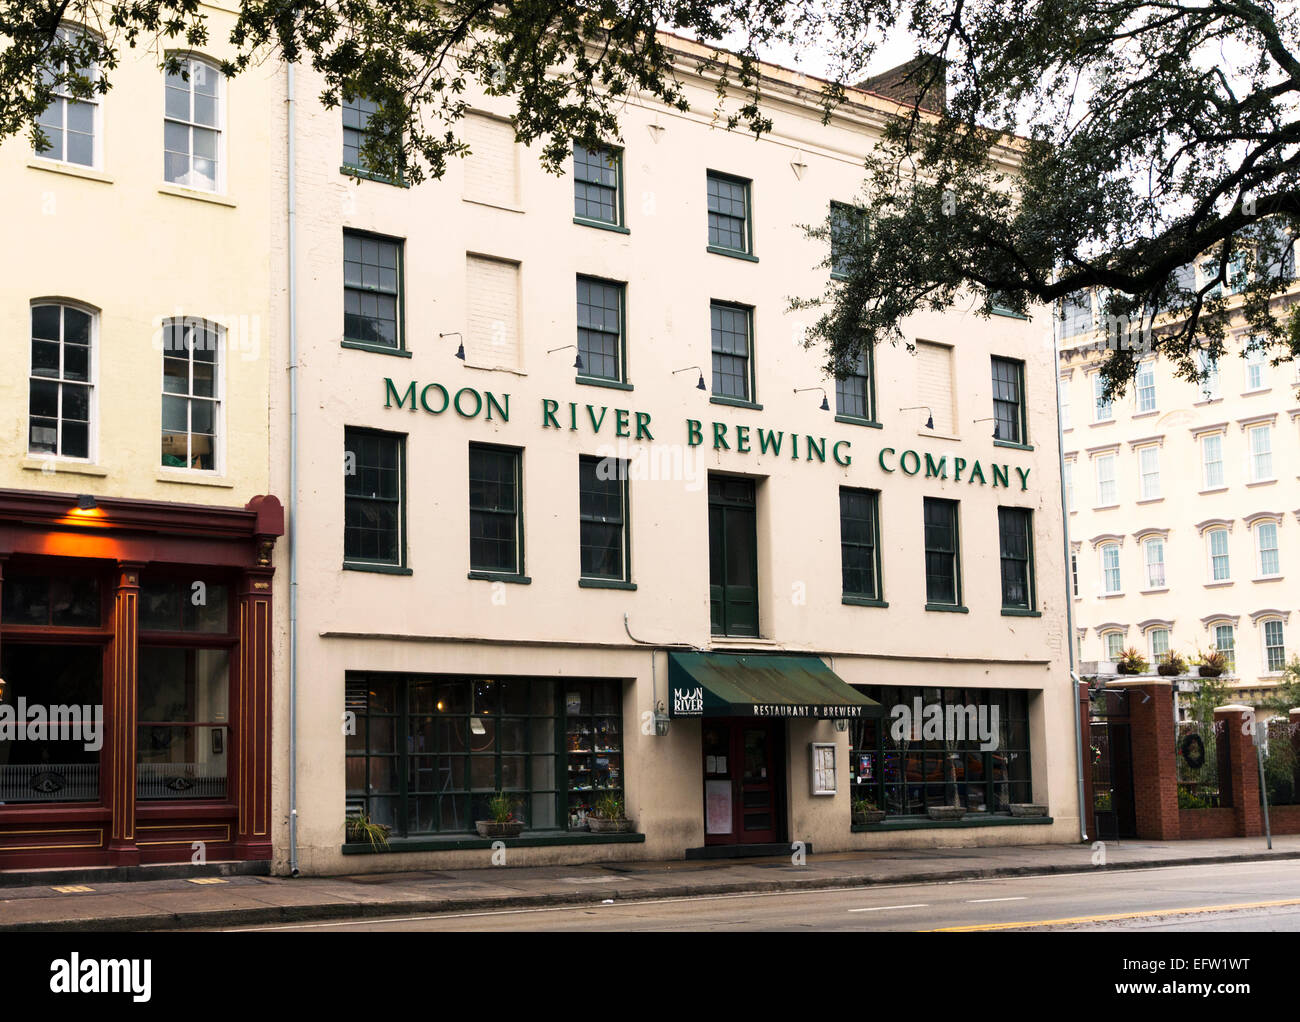 Moon River Brewing Company Restaurant and Bar in Downtown Savannah Georgia Stock Photo